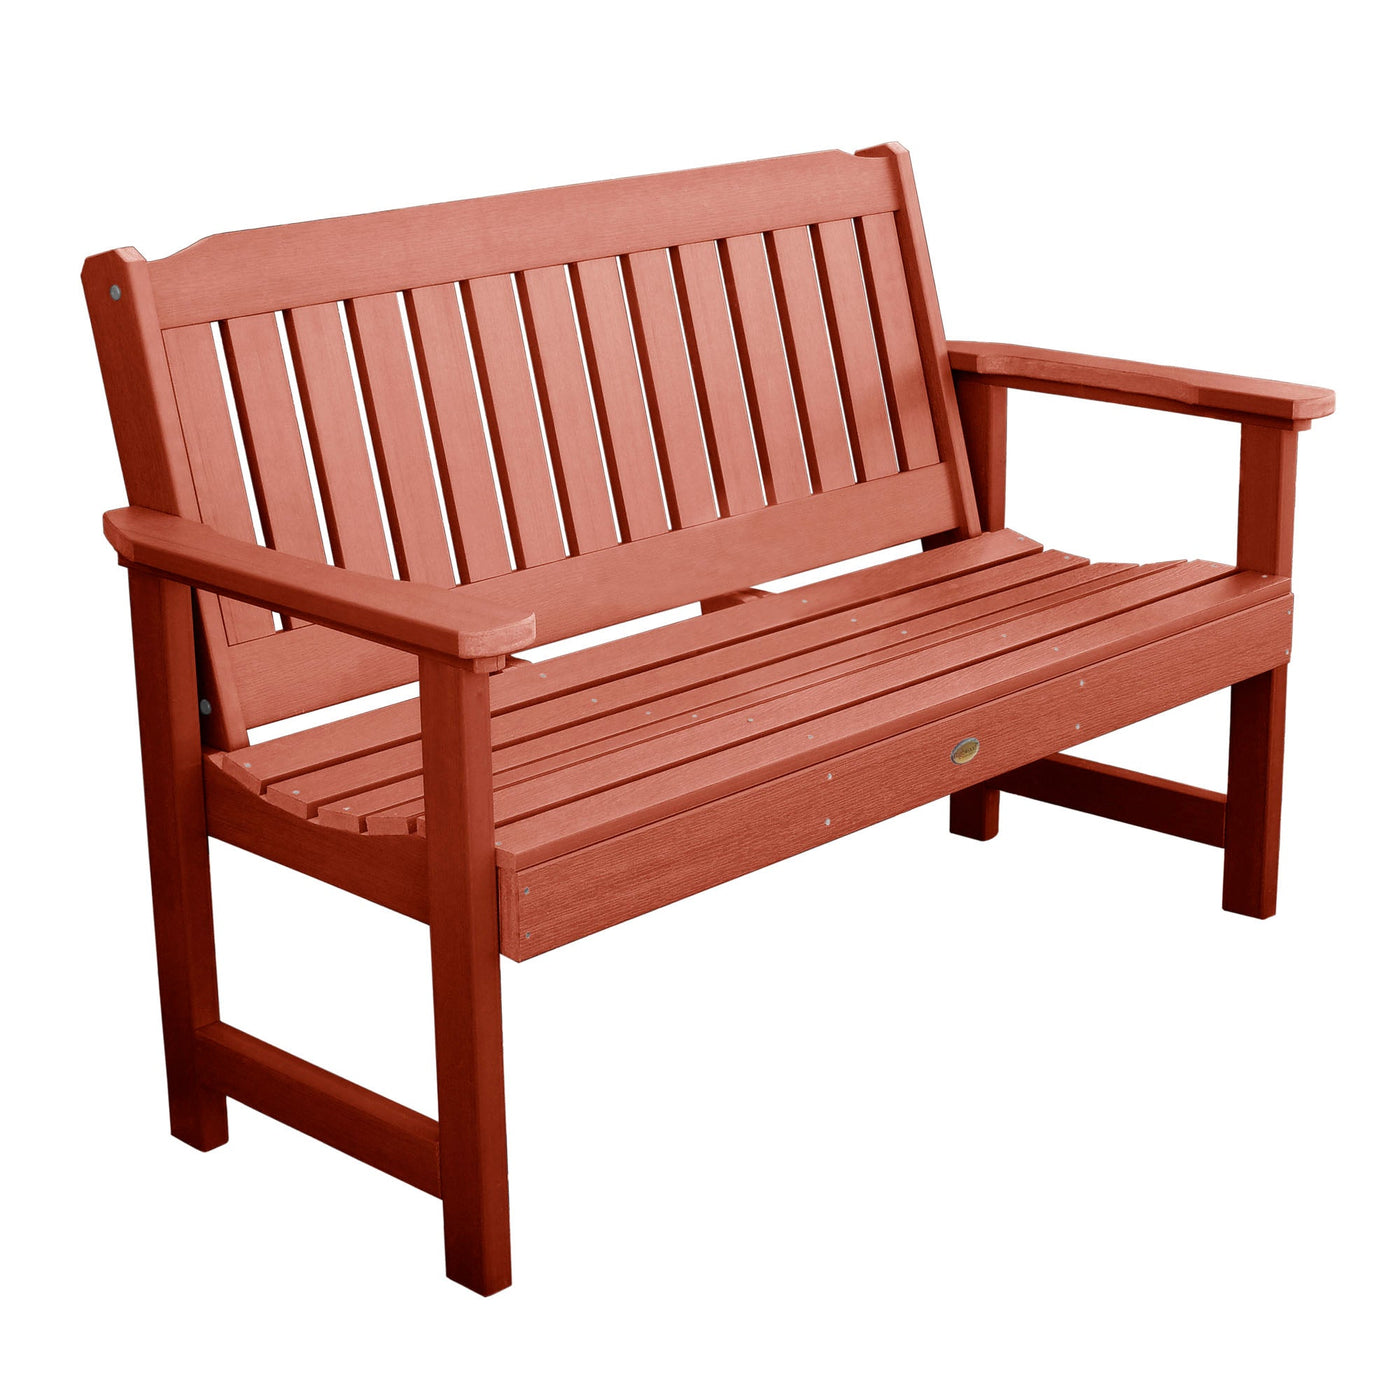 Lehigh Garden Bench - 5ft Bench Highwood USA Rustic Red 